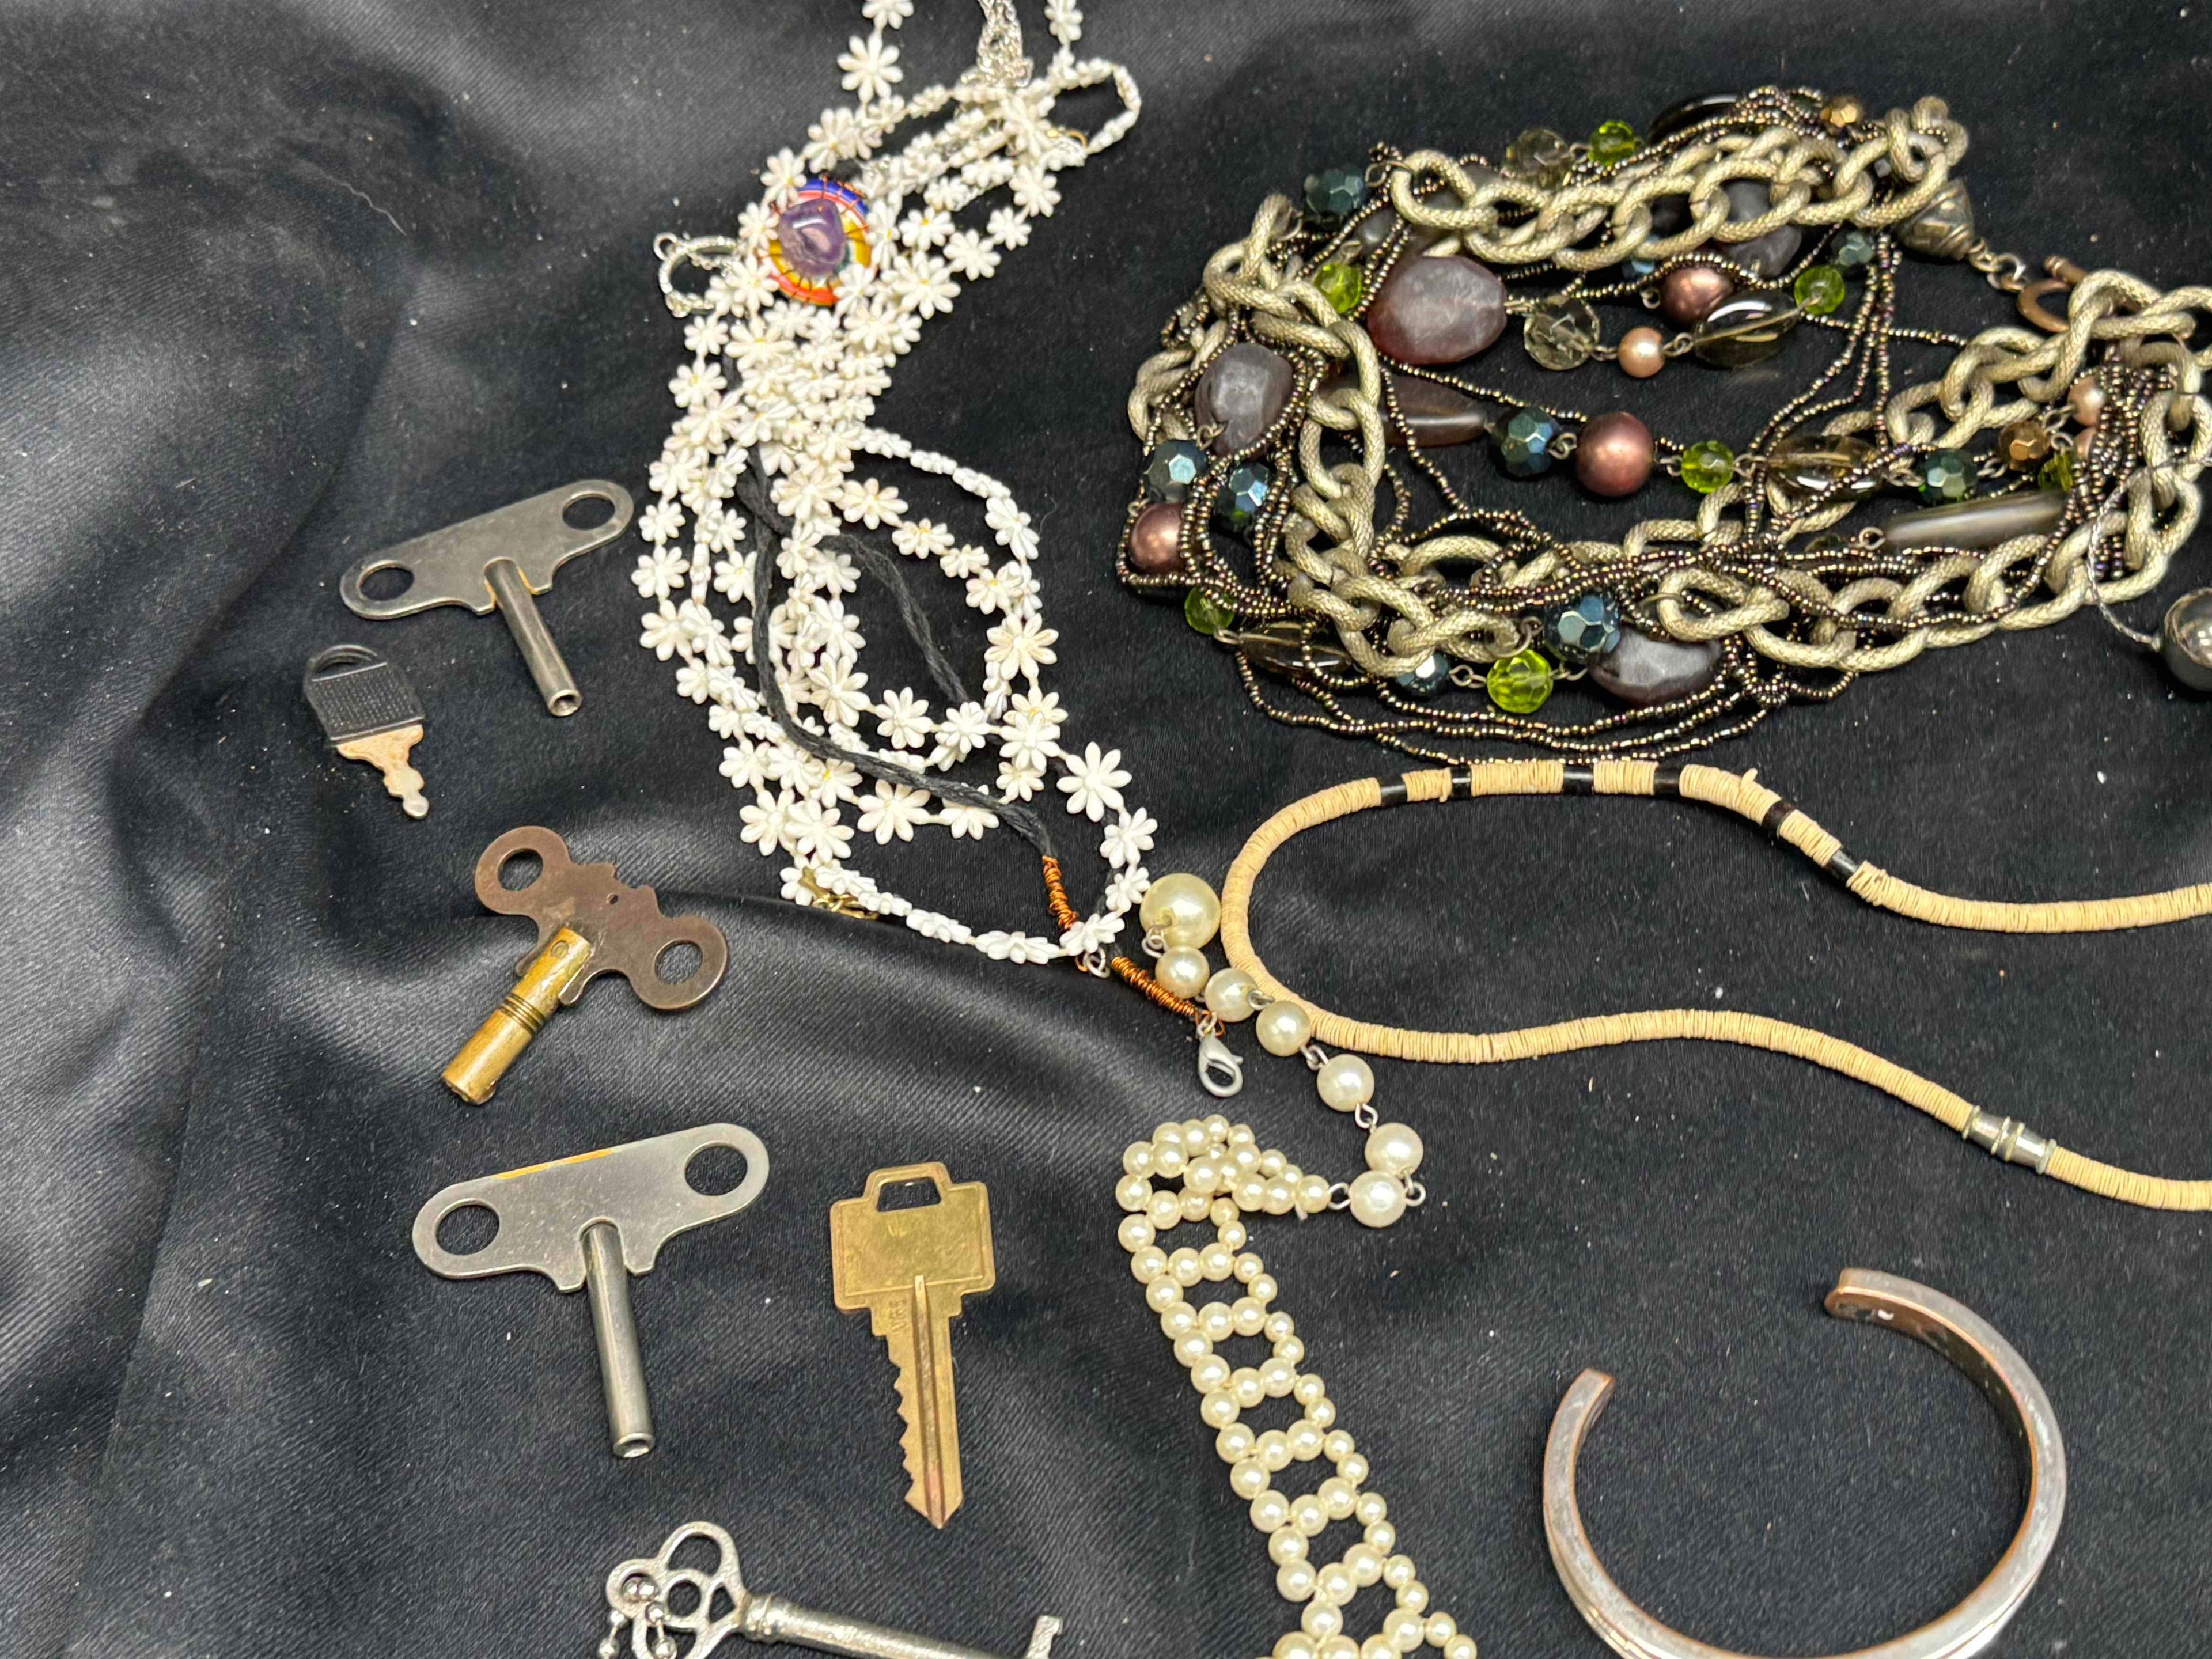 Fancy Costume Jewelry . Necklaces, Bracelets, Rings, Old Keys more